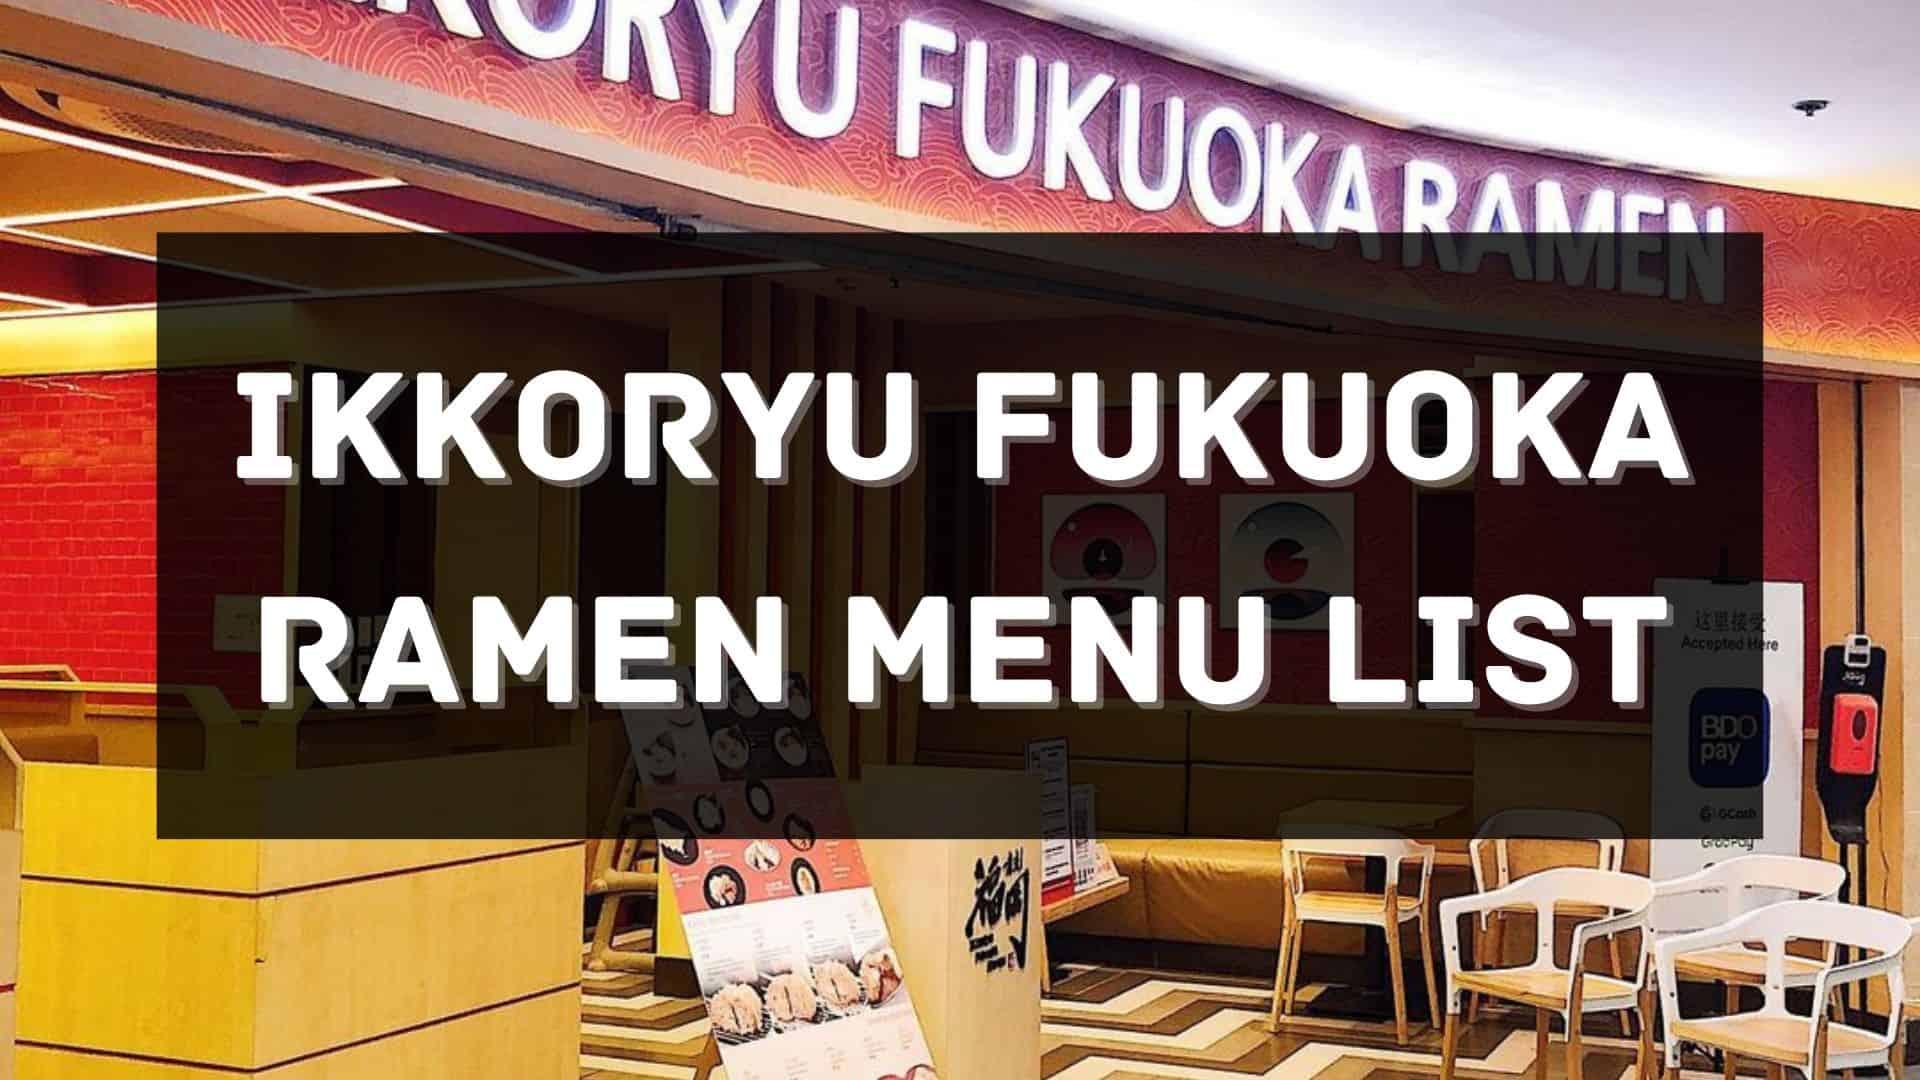 ikkoryu fukuoka ramen menu prices philippines